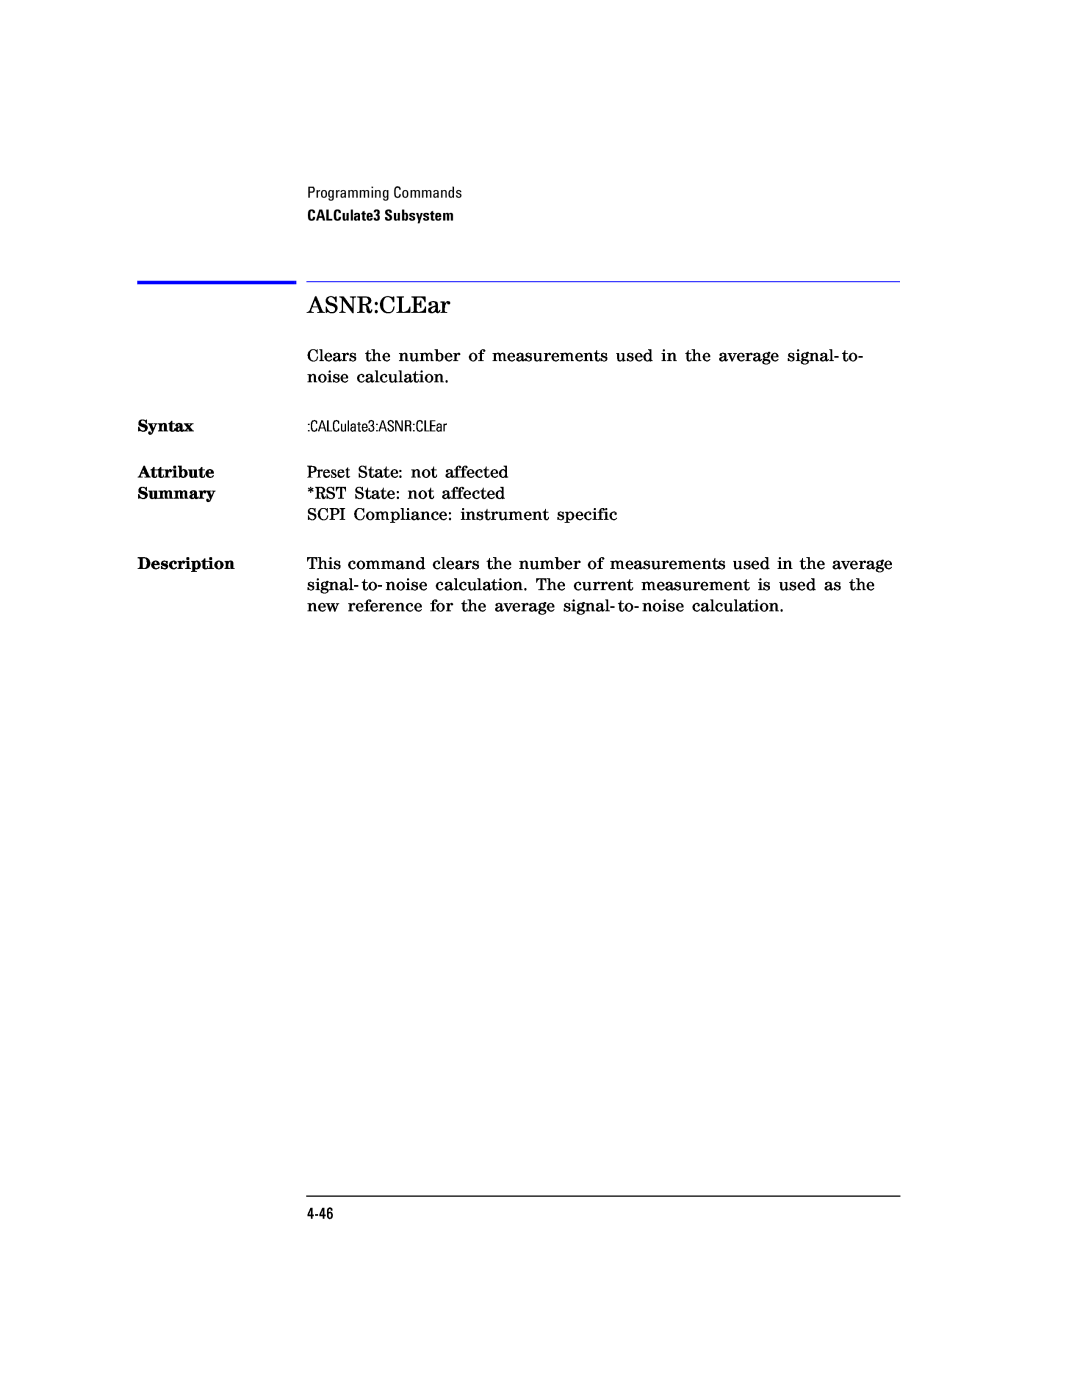 Agilent Technologies Agilent 86120C manual ASNRCLEar, Syntax, Attribute, Summary, Description 